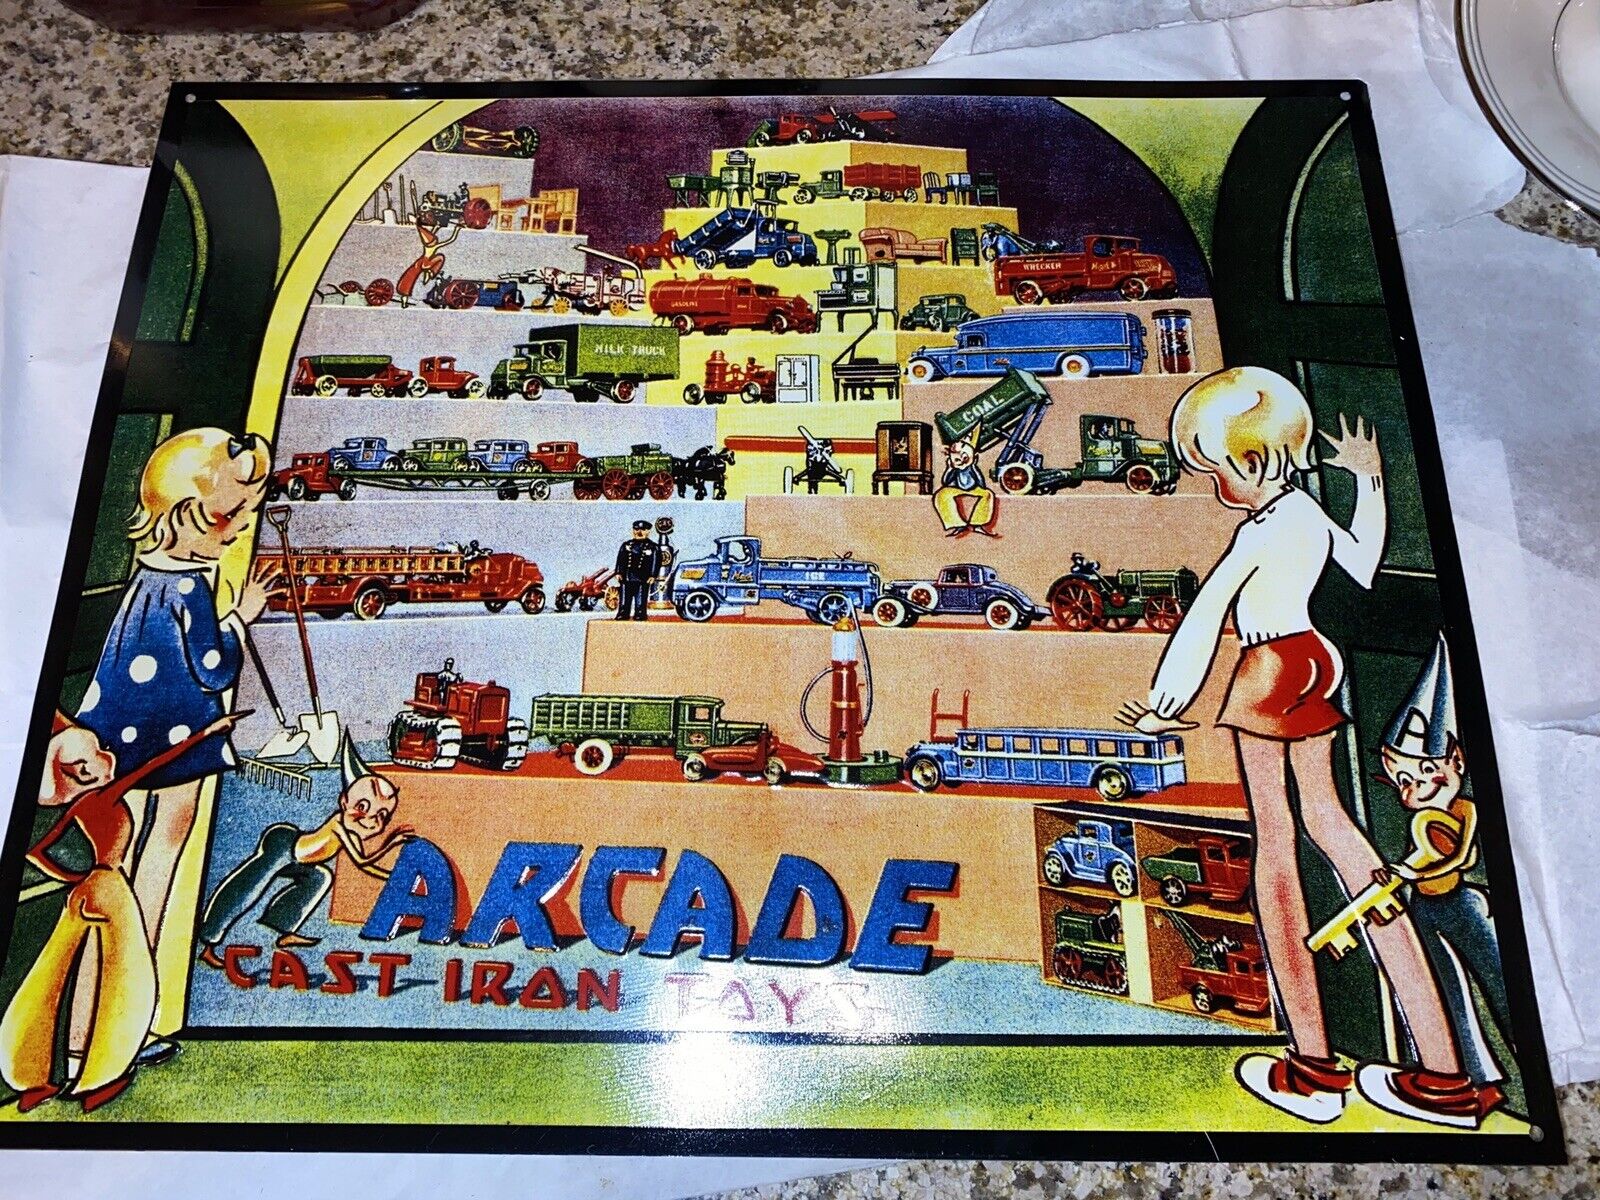 Arcade Cast Iron Toys Sign Vintage